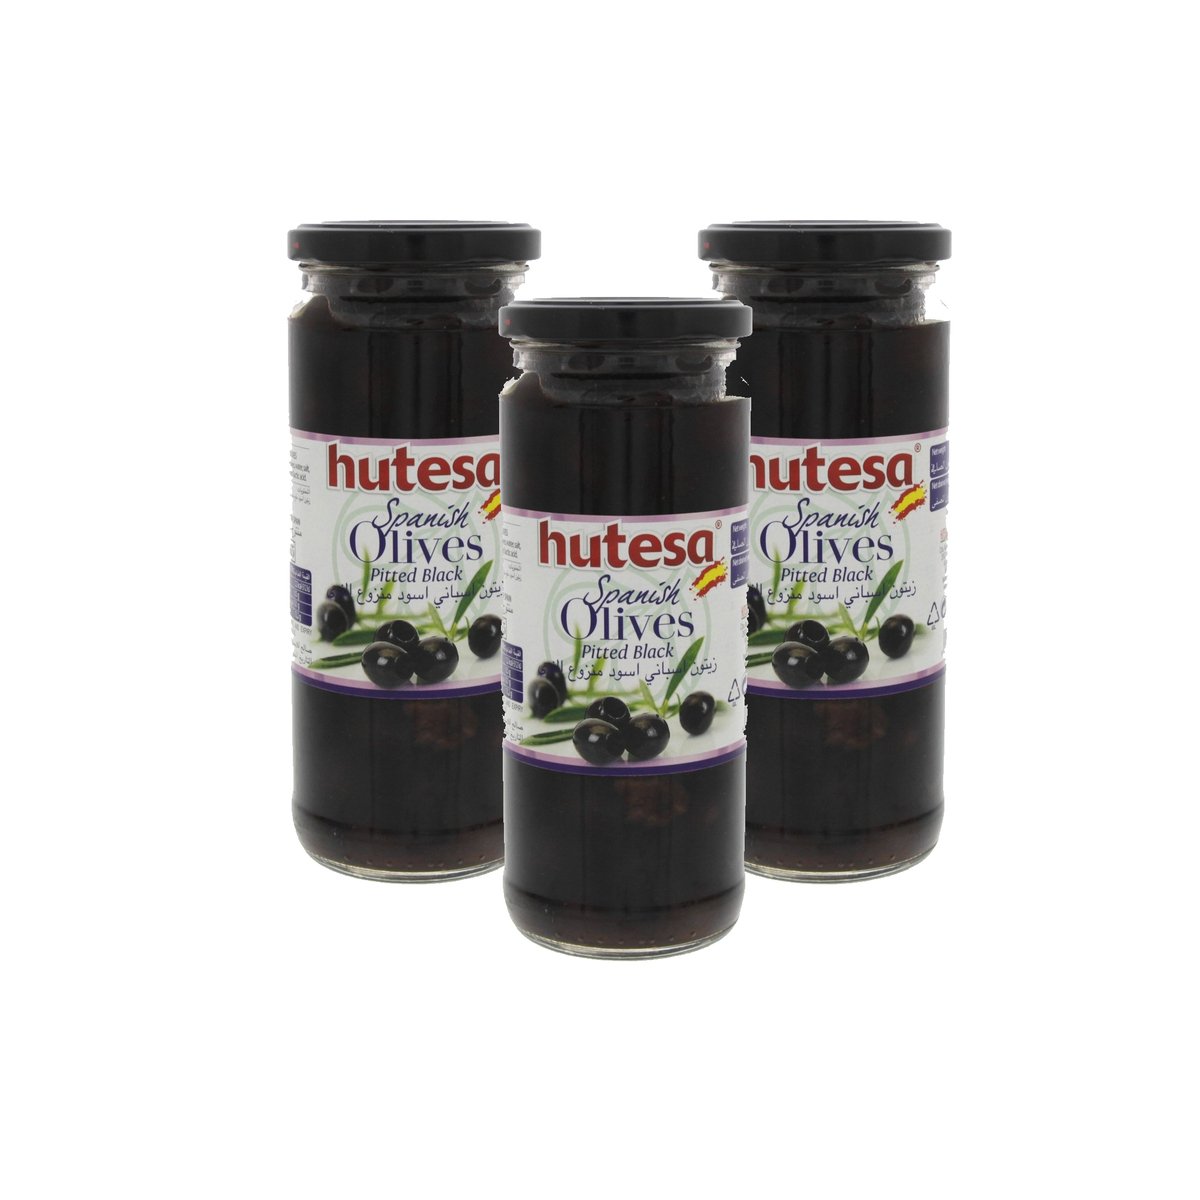 Hutesa Spanish Pitted Black Olives 3 x 212g